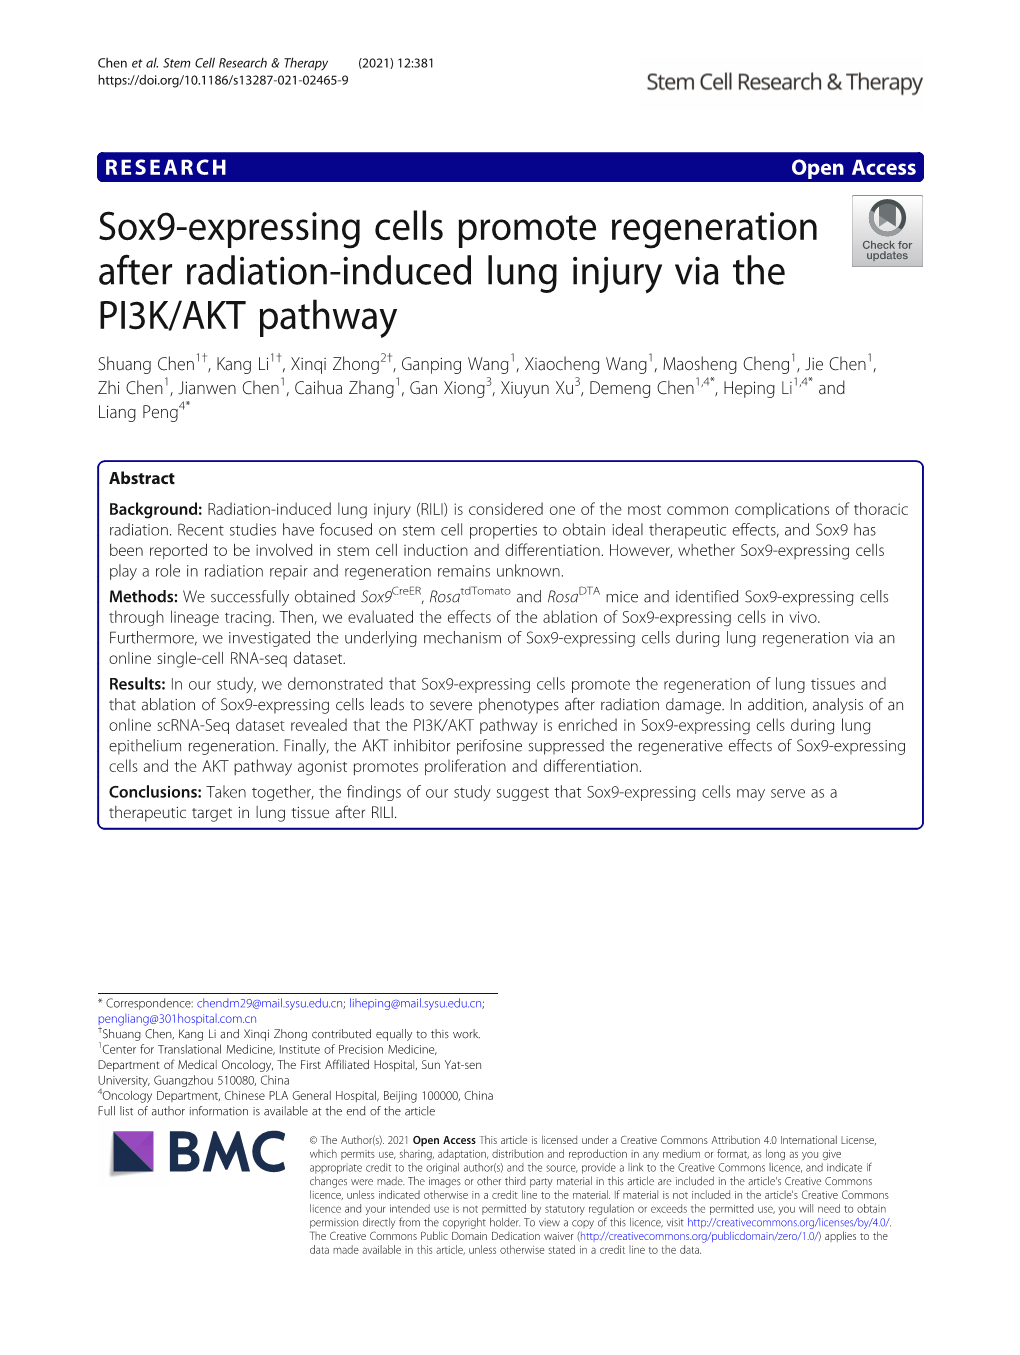 Sox9-Expressing Cells Promote Regeneration After Radiation